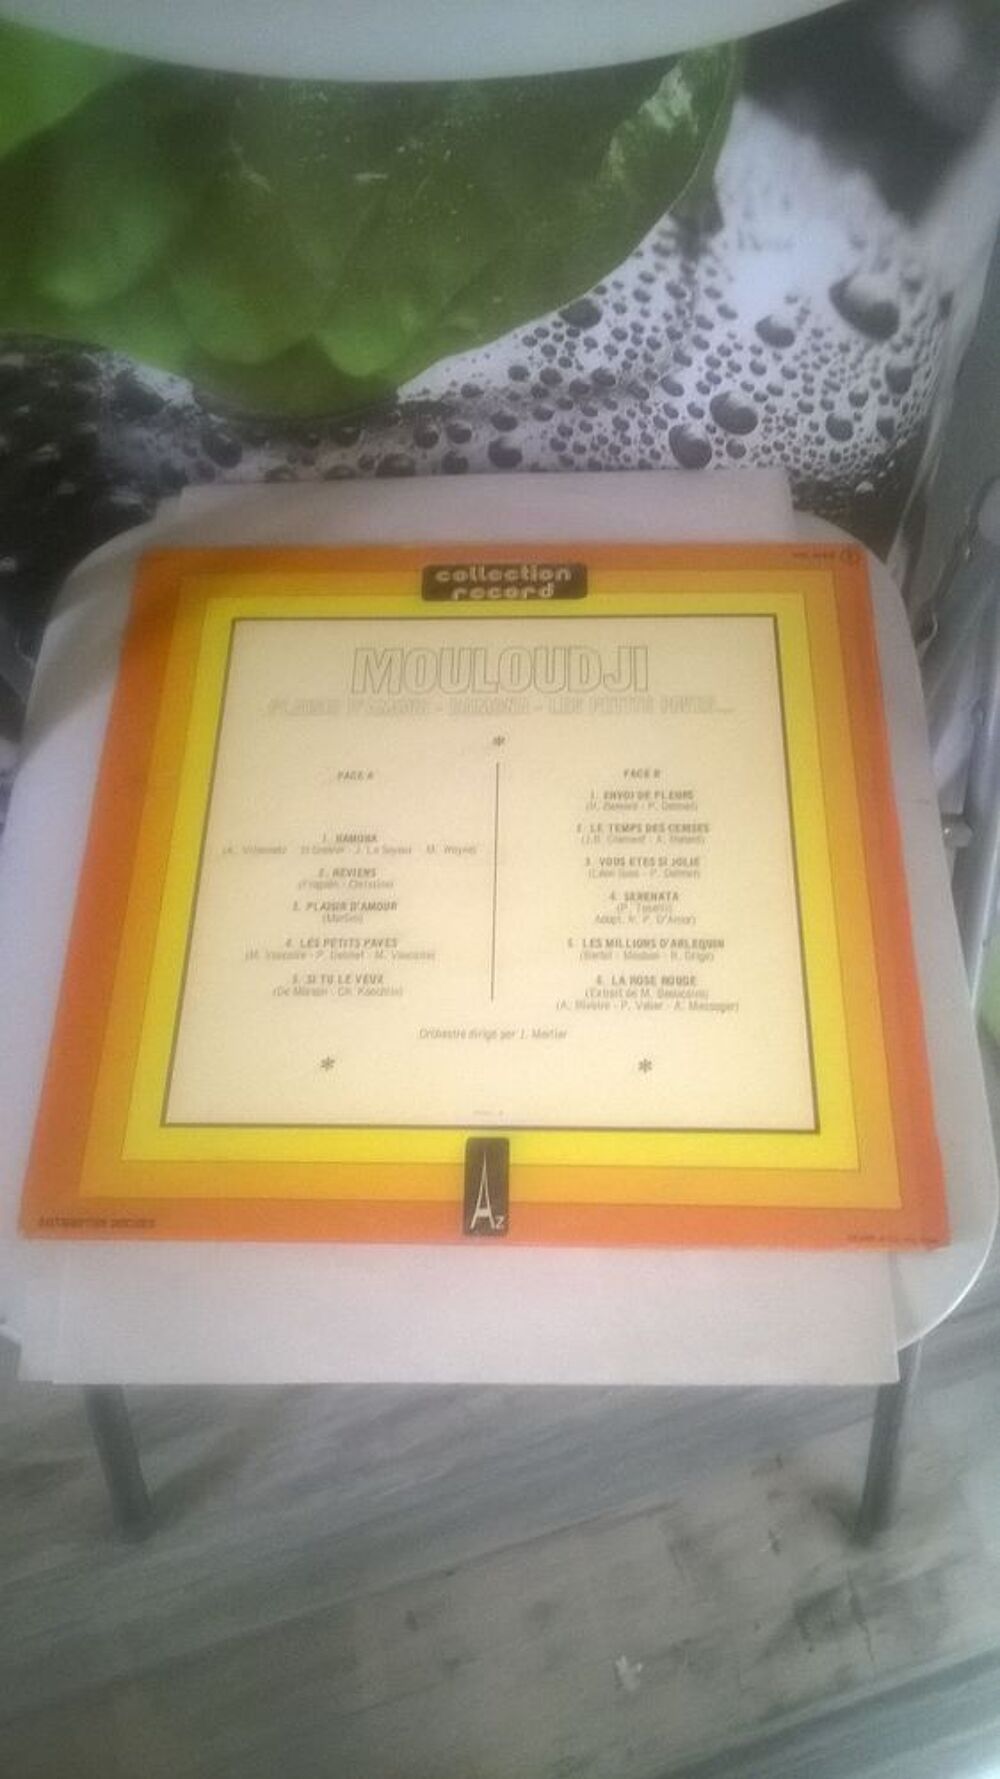 Vinyle Mouloudji
1974
Bon etat
Ramona
Reviens
Plaisir D'A CD et vinyles